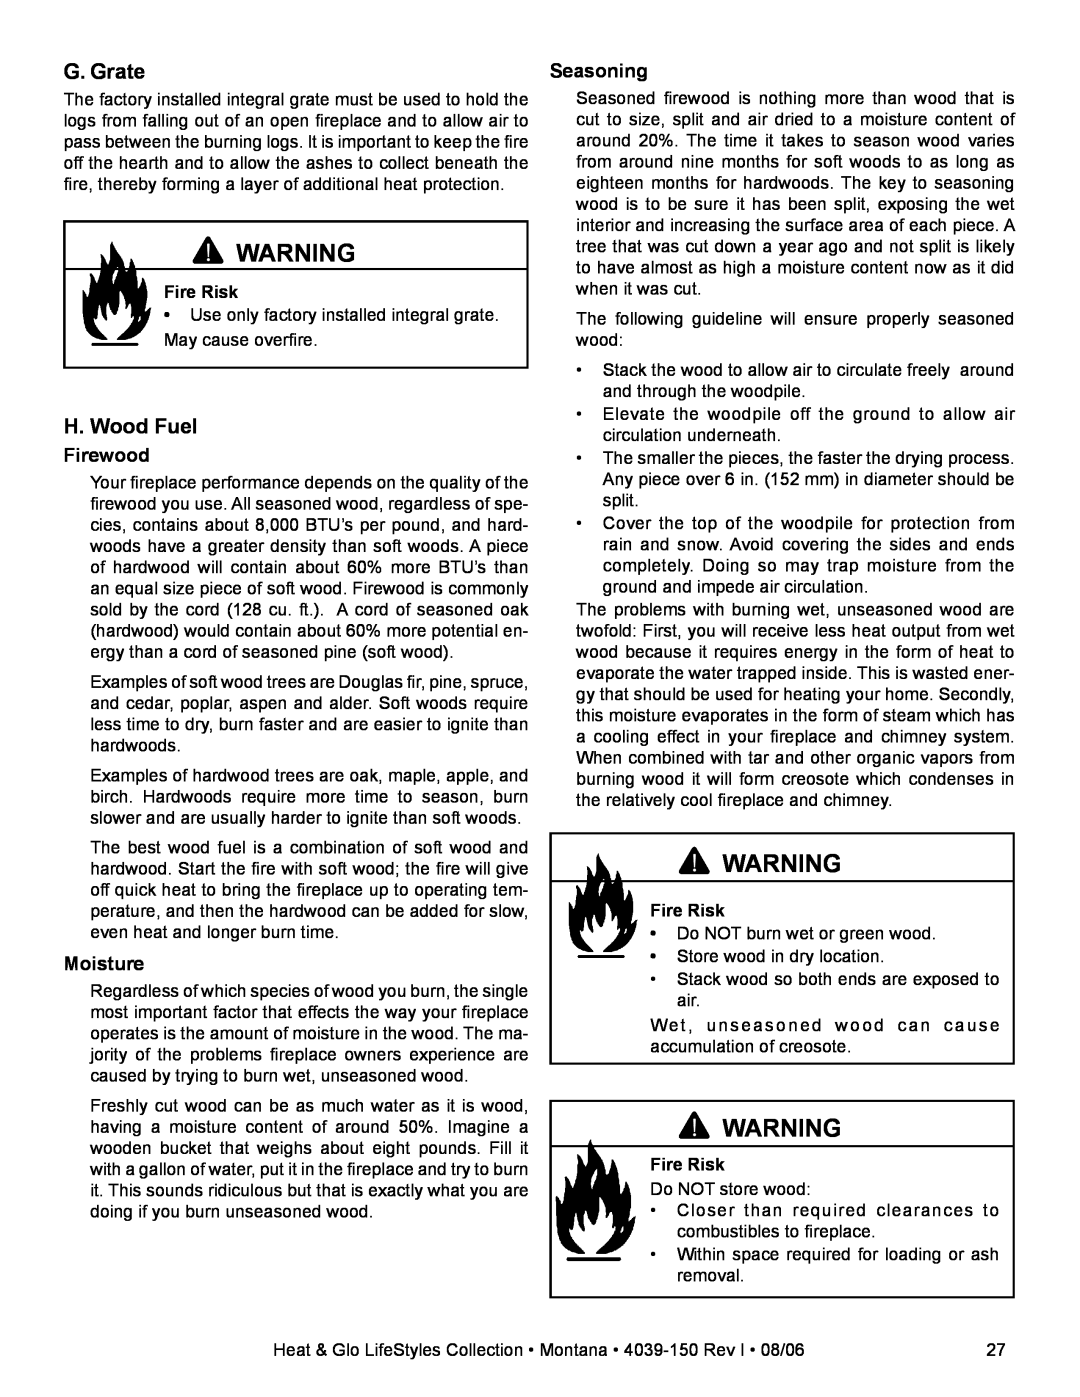 Heat & Glo LifeStyle Montana-36, Montana-42 owner manual G. Grate, H.Wood Fuel, Firewood, Moisture, Seasoning, Fire Risk 